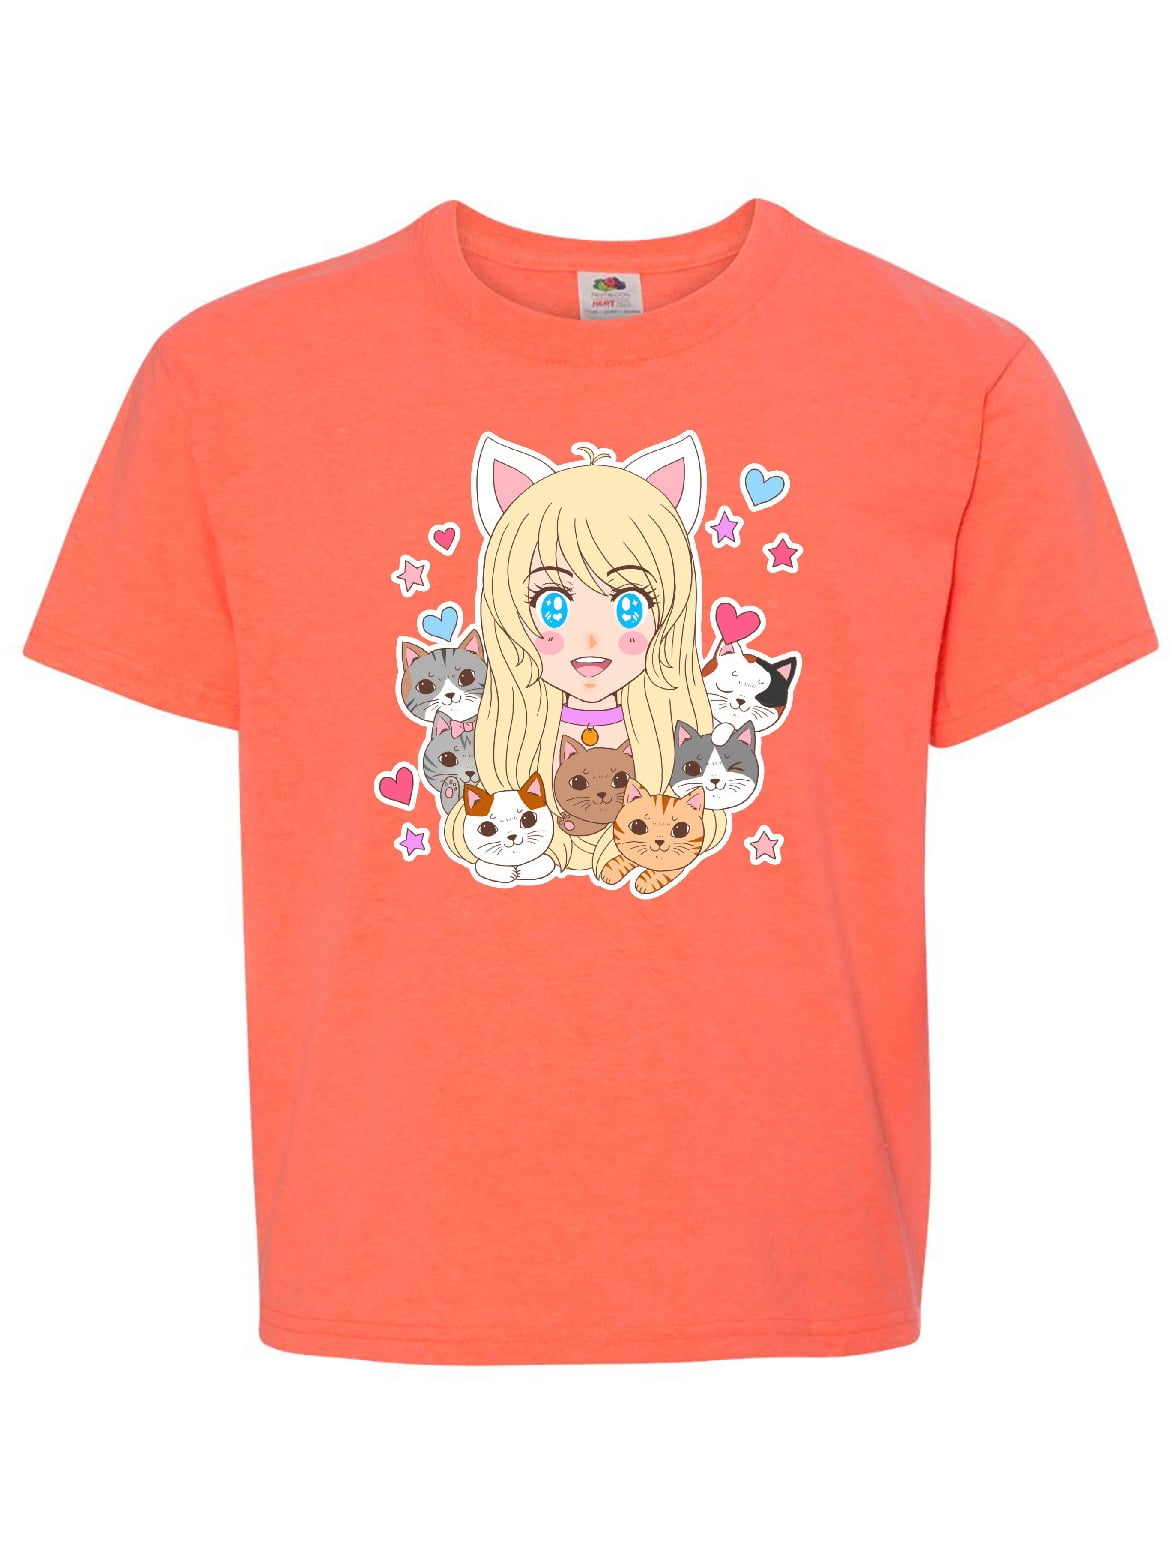 Neko Anime Girl with Kittens Youth T-Shirt - Walmart.com - Walmart.com